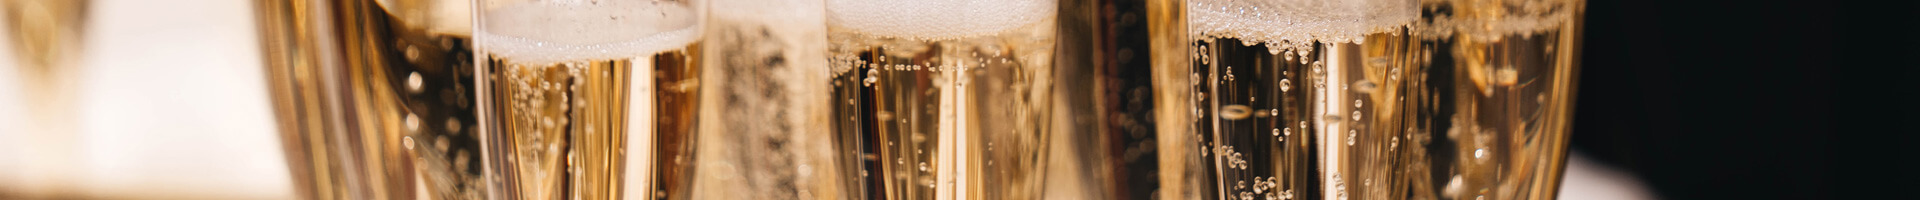 Sparkling wine in champagne glasses.